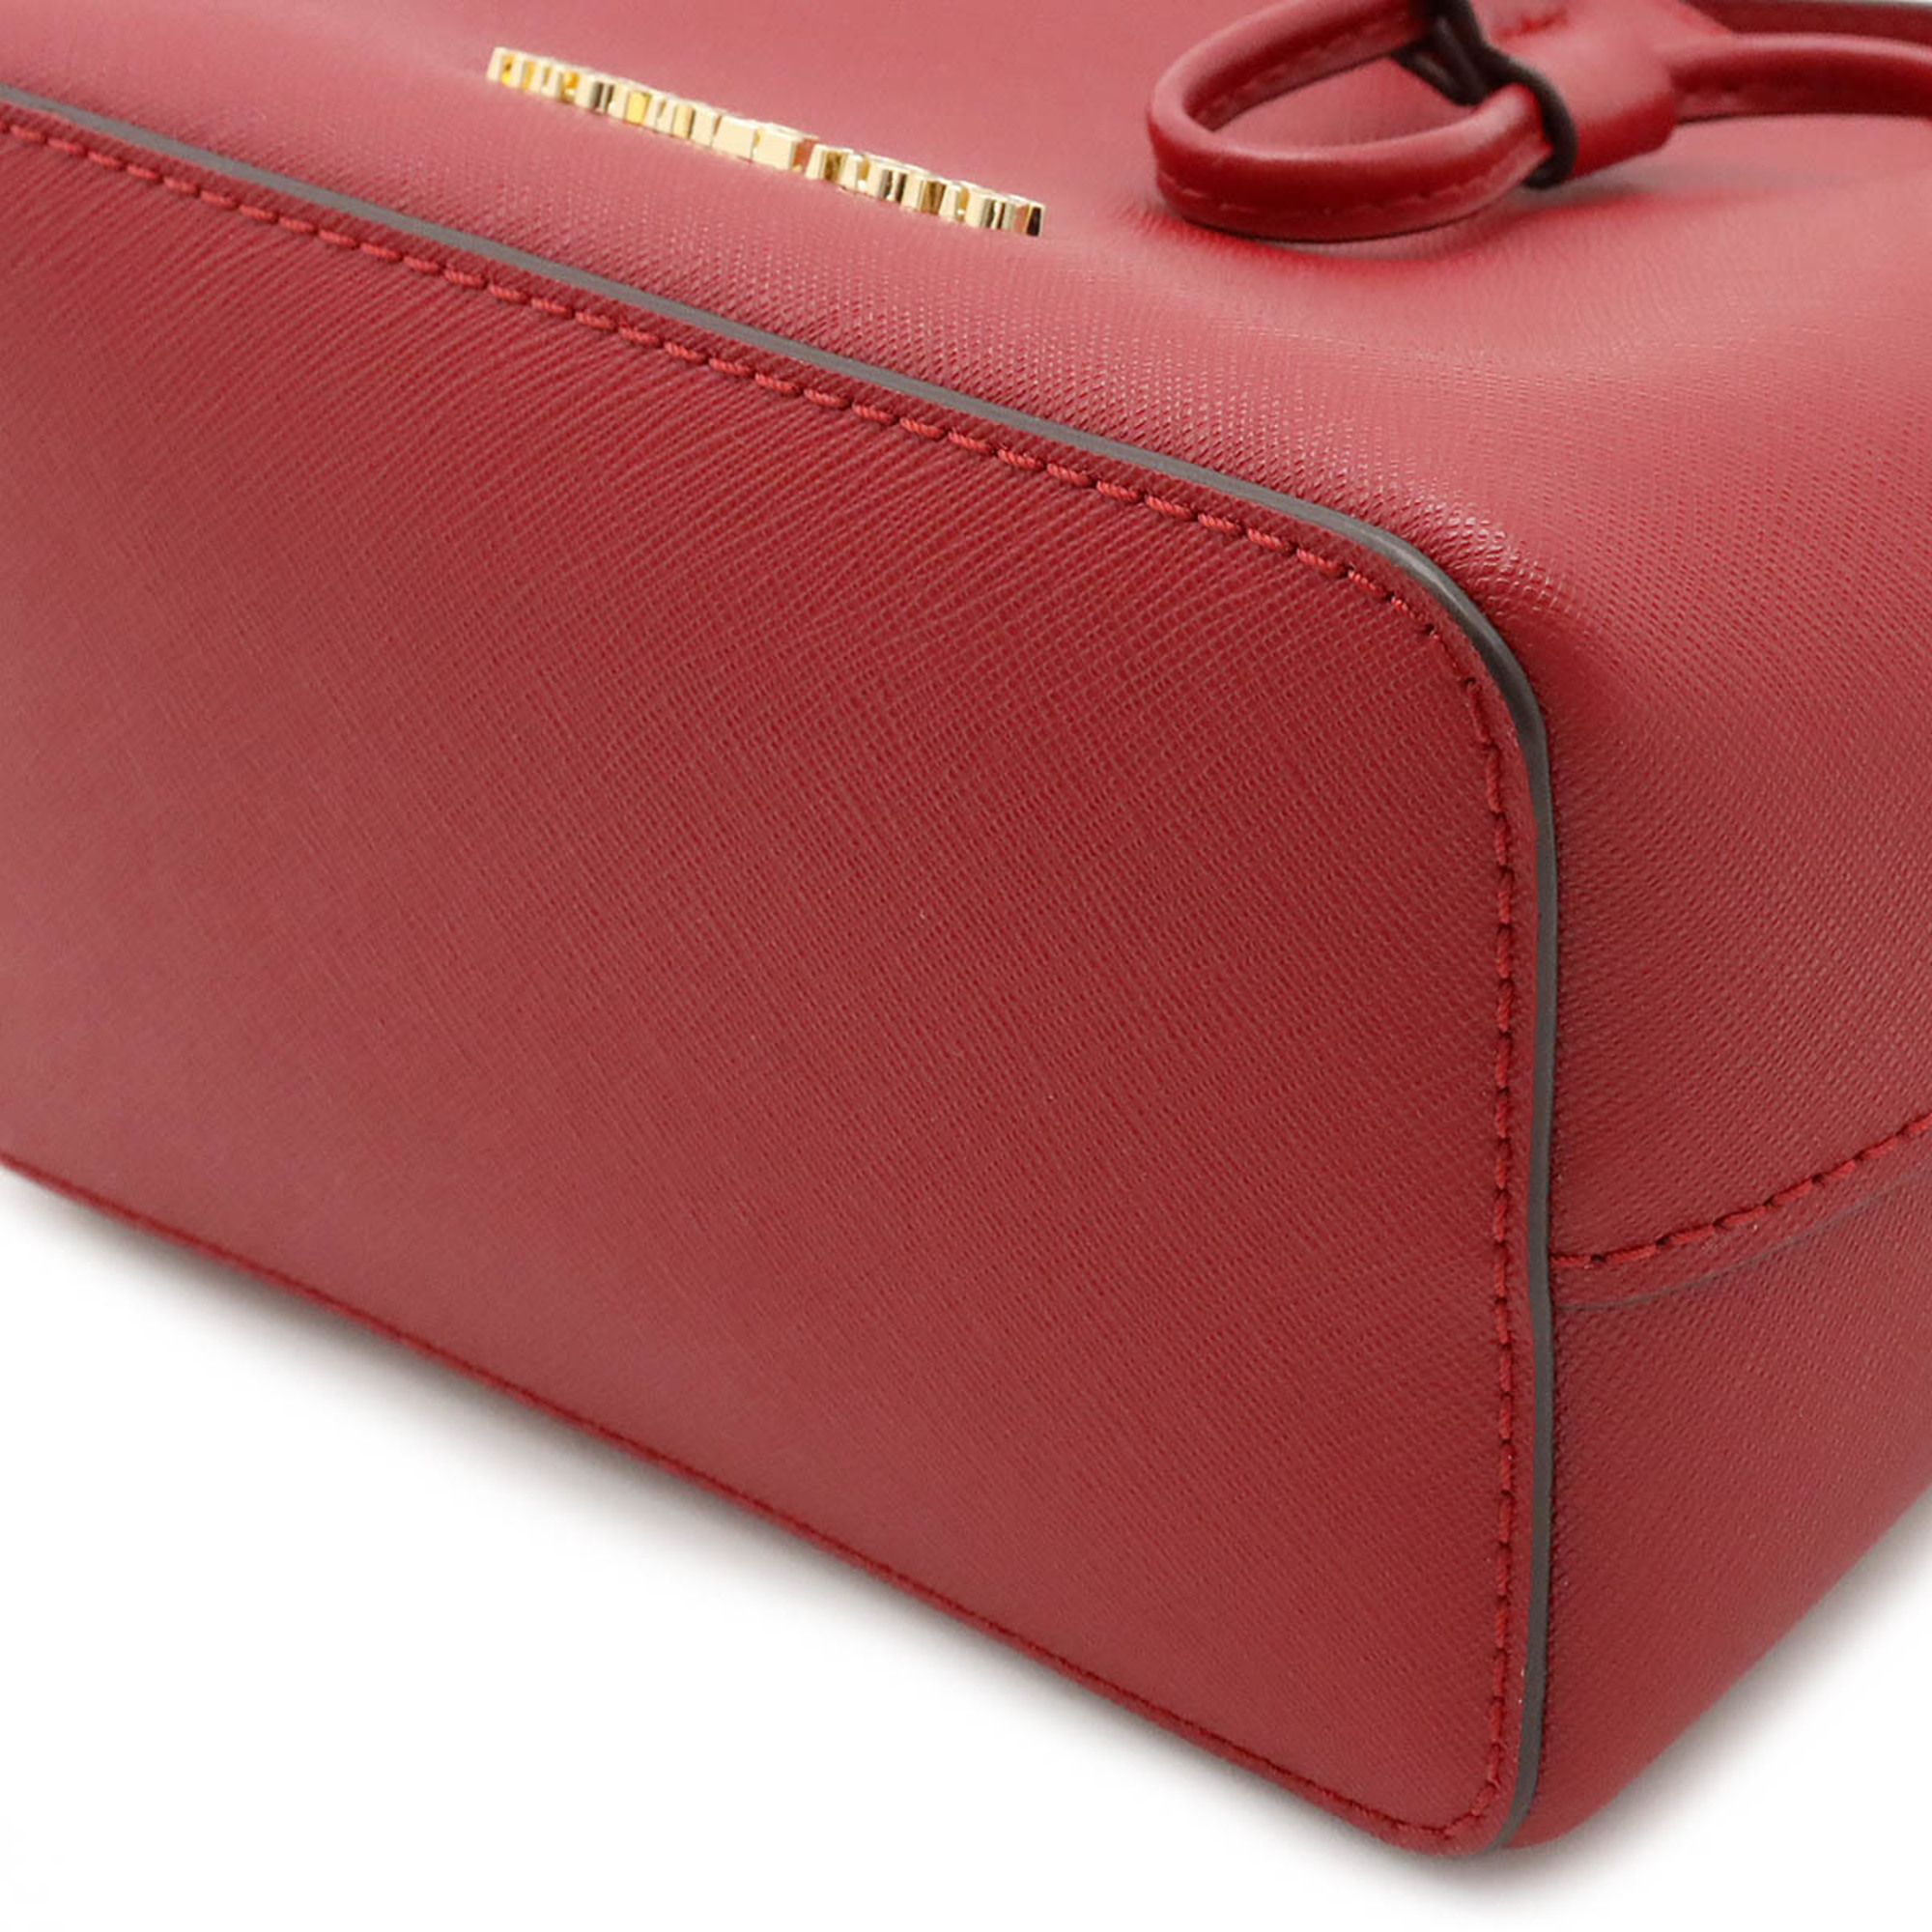 MICHAEL KORS Michael Kors handbag bag shoulder leather red 35T0GU2C0L